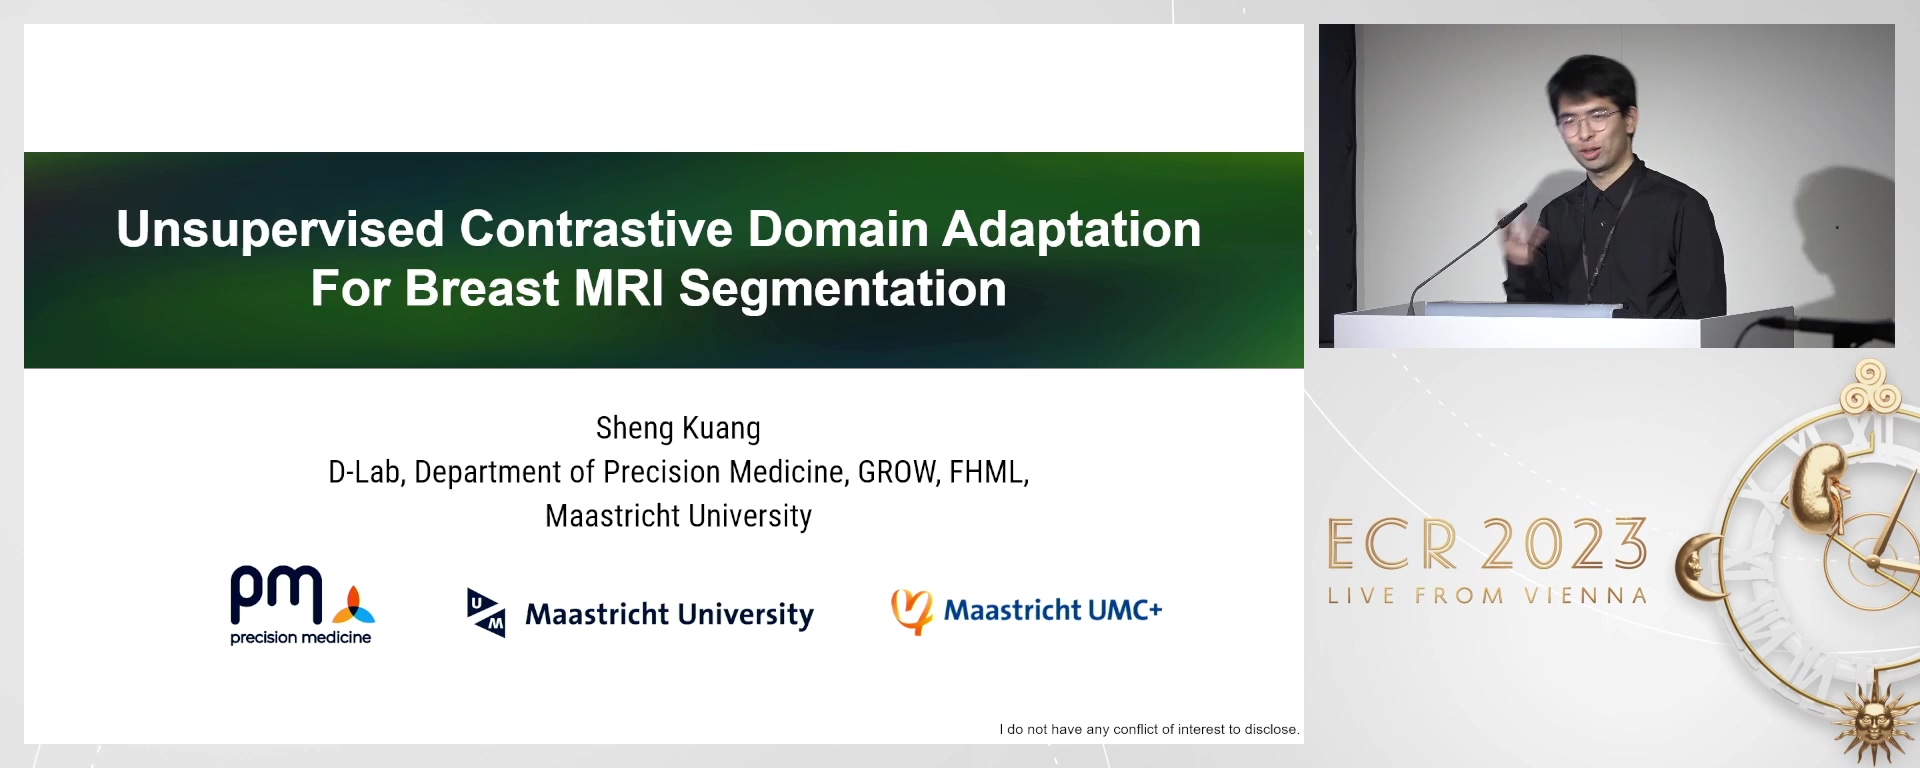 Unsupervised contrastive domain adaptation for breast MRI segmentation